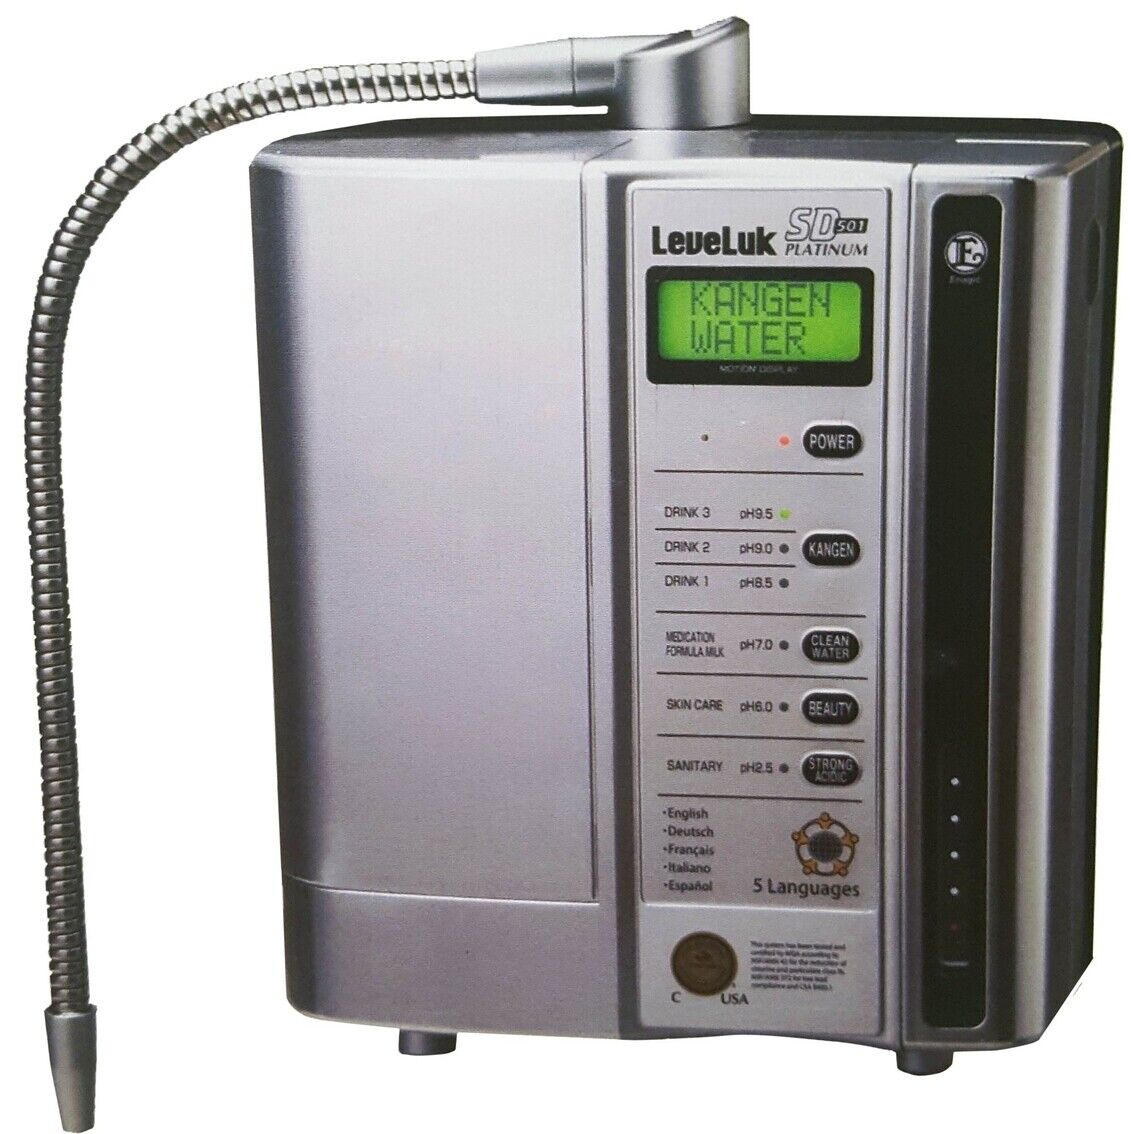 Enagic Leveluk SD501 Platinum Kangen Water Ionizer Filter Machine NEW